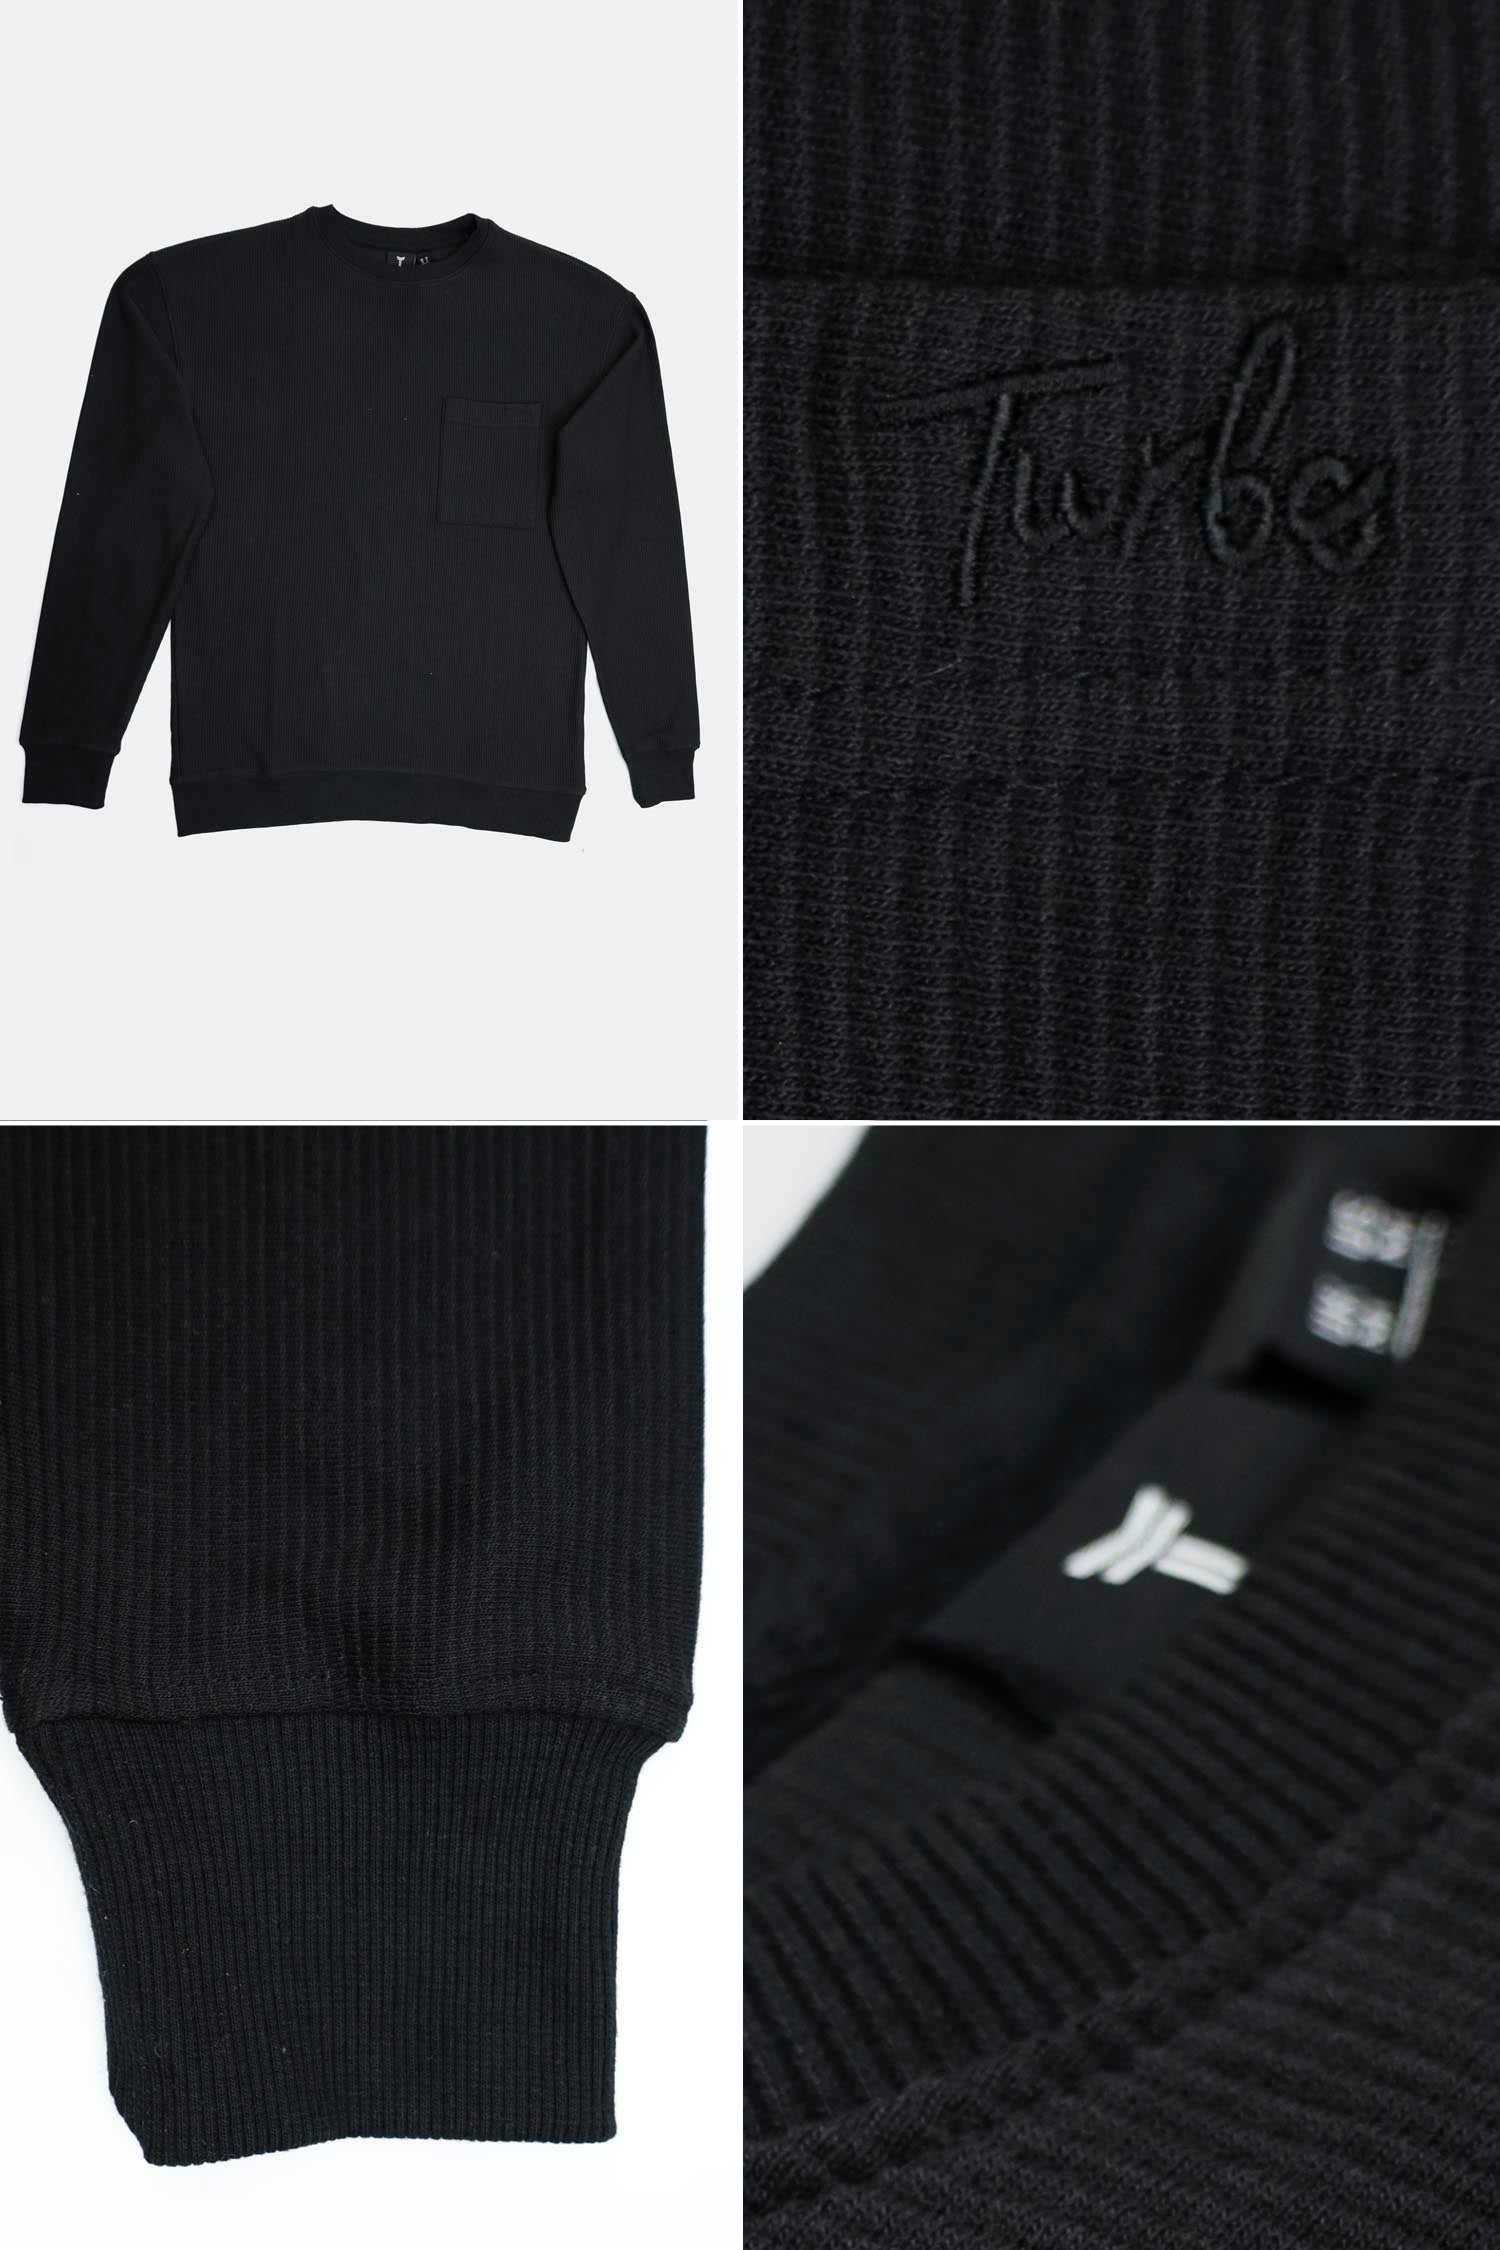 Turbo Pocket Style Embroided Men's Sweatshirt In Black